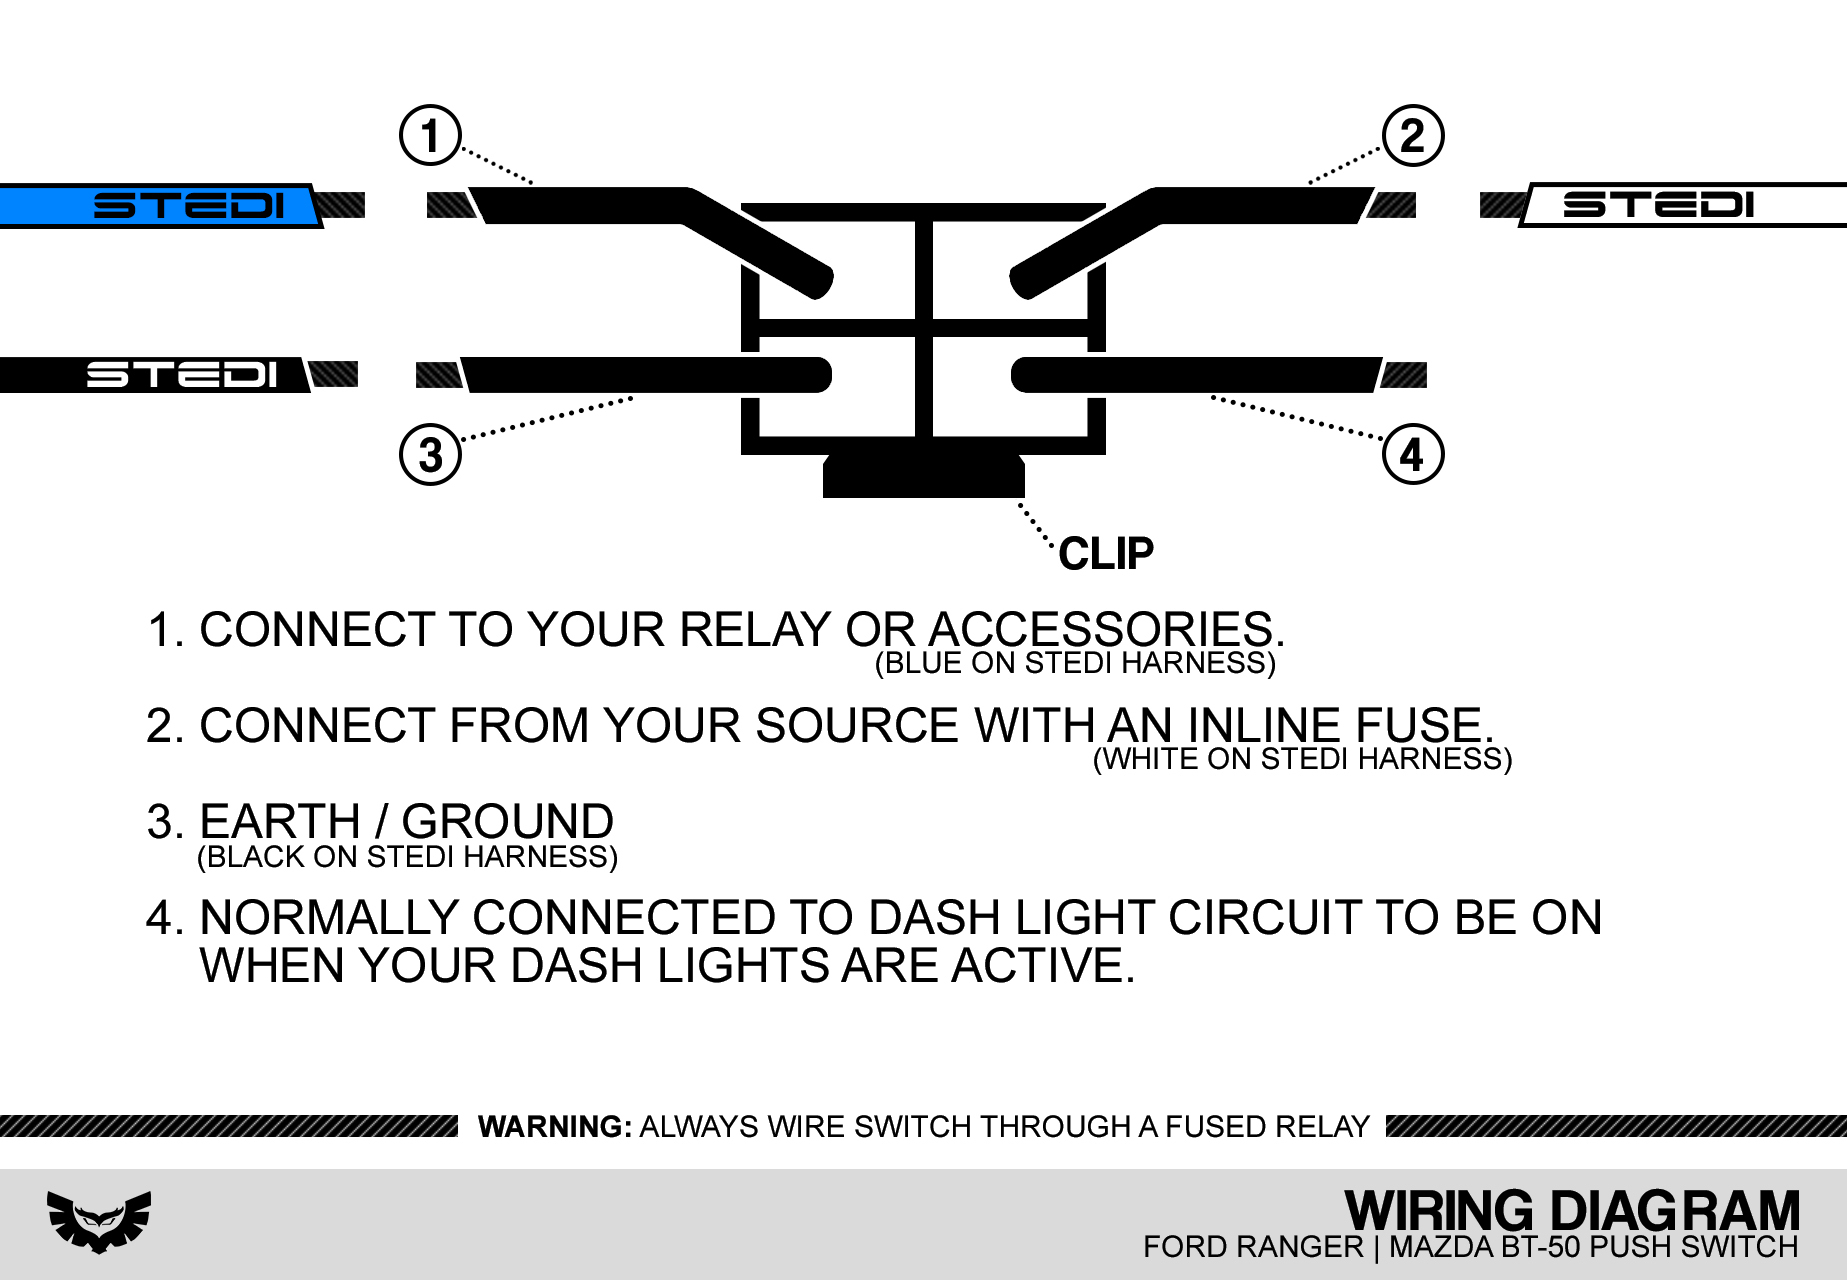 Wiring Diagram For Led Light Bar from www.stedi.com.au